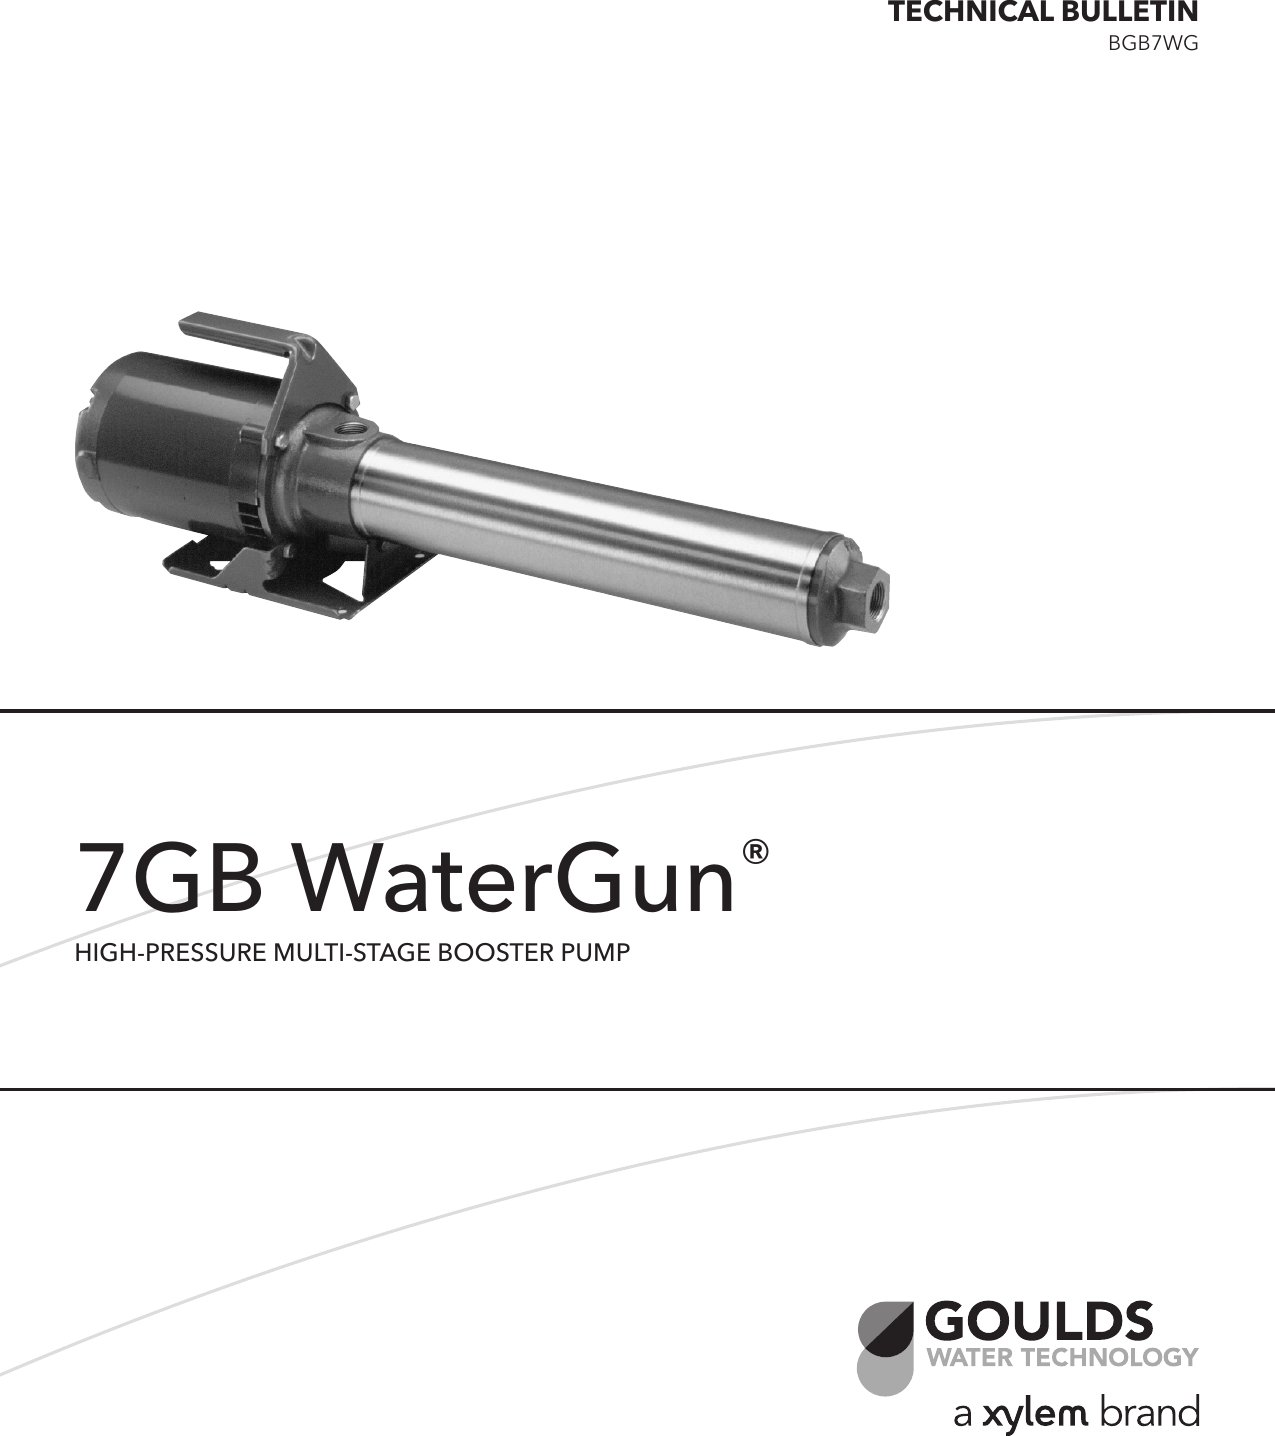 Page 1 of 4 - 545931 1 Goulds 7GB Water Gun Brochure